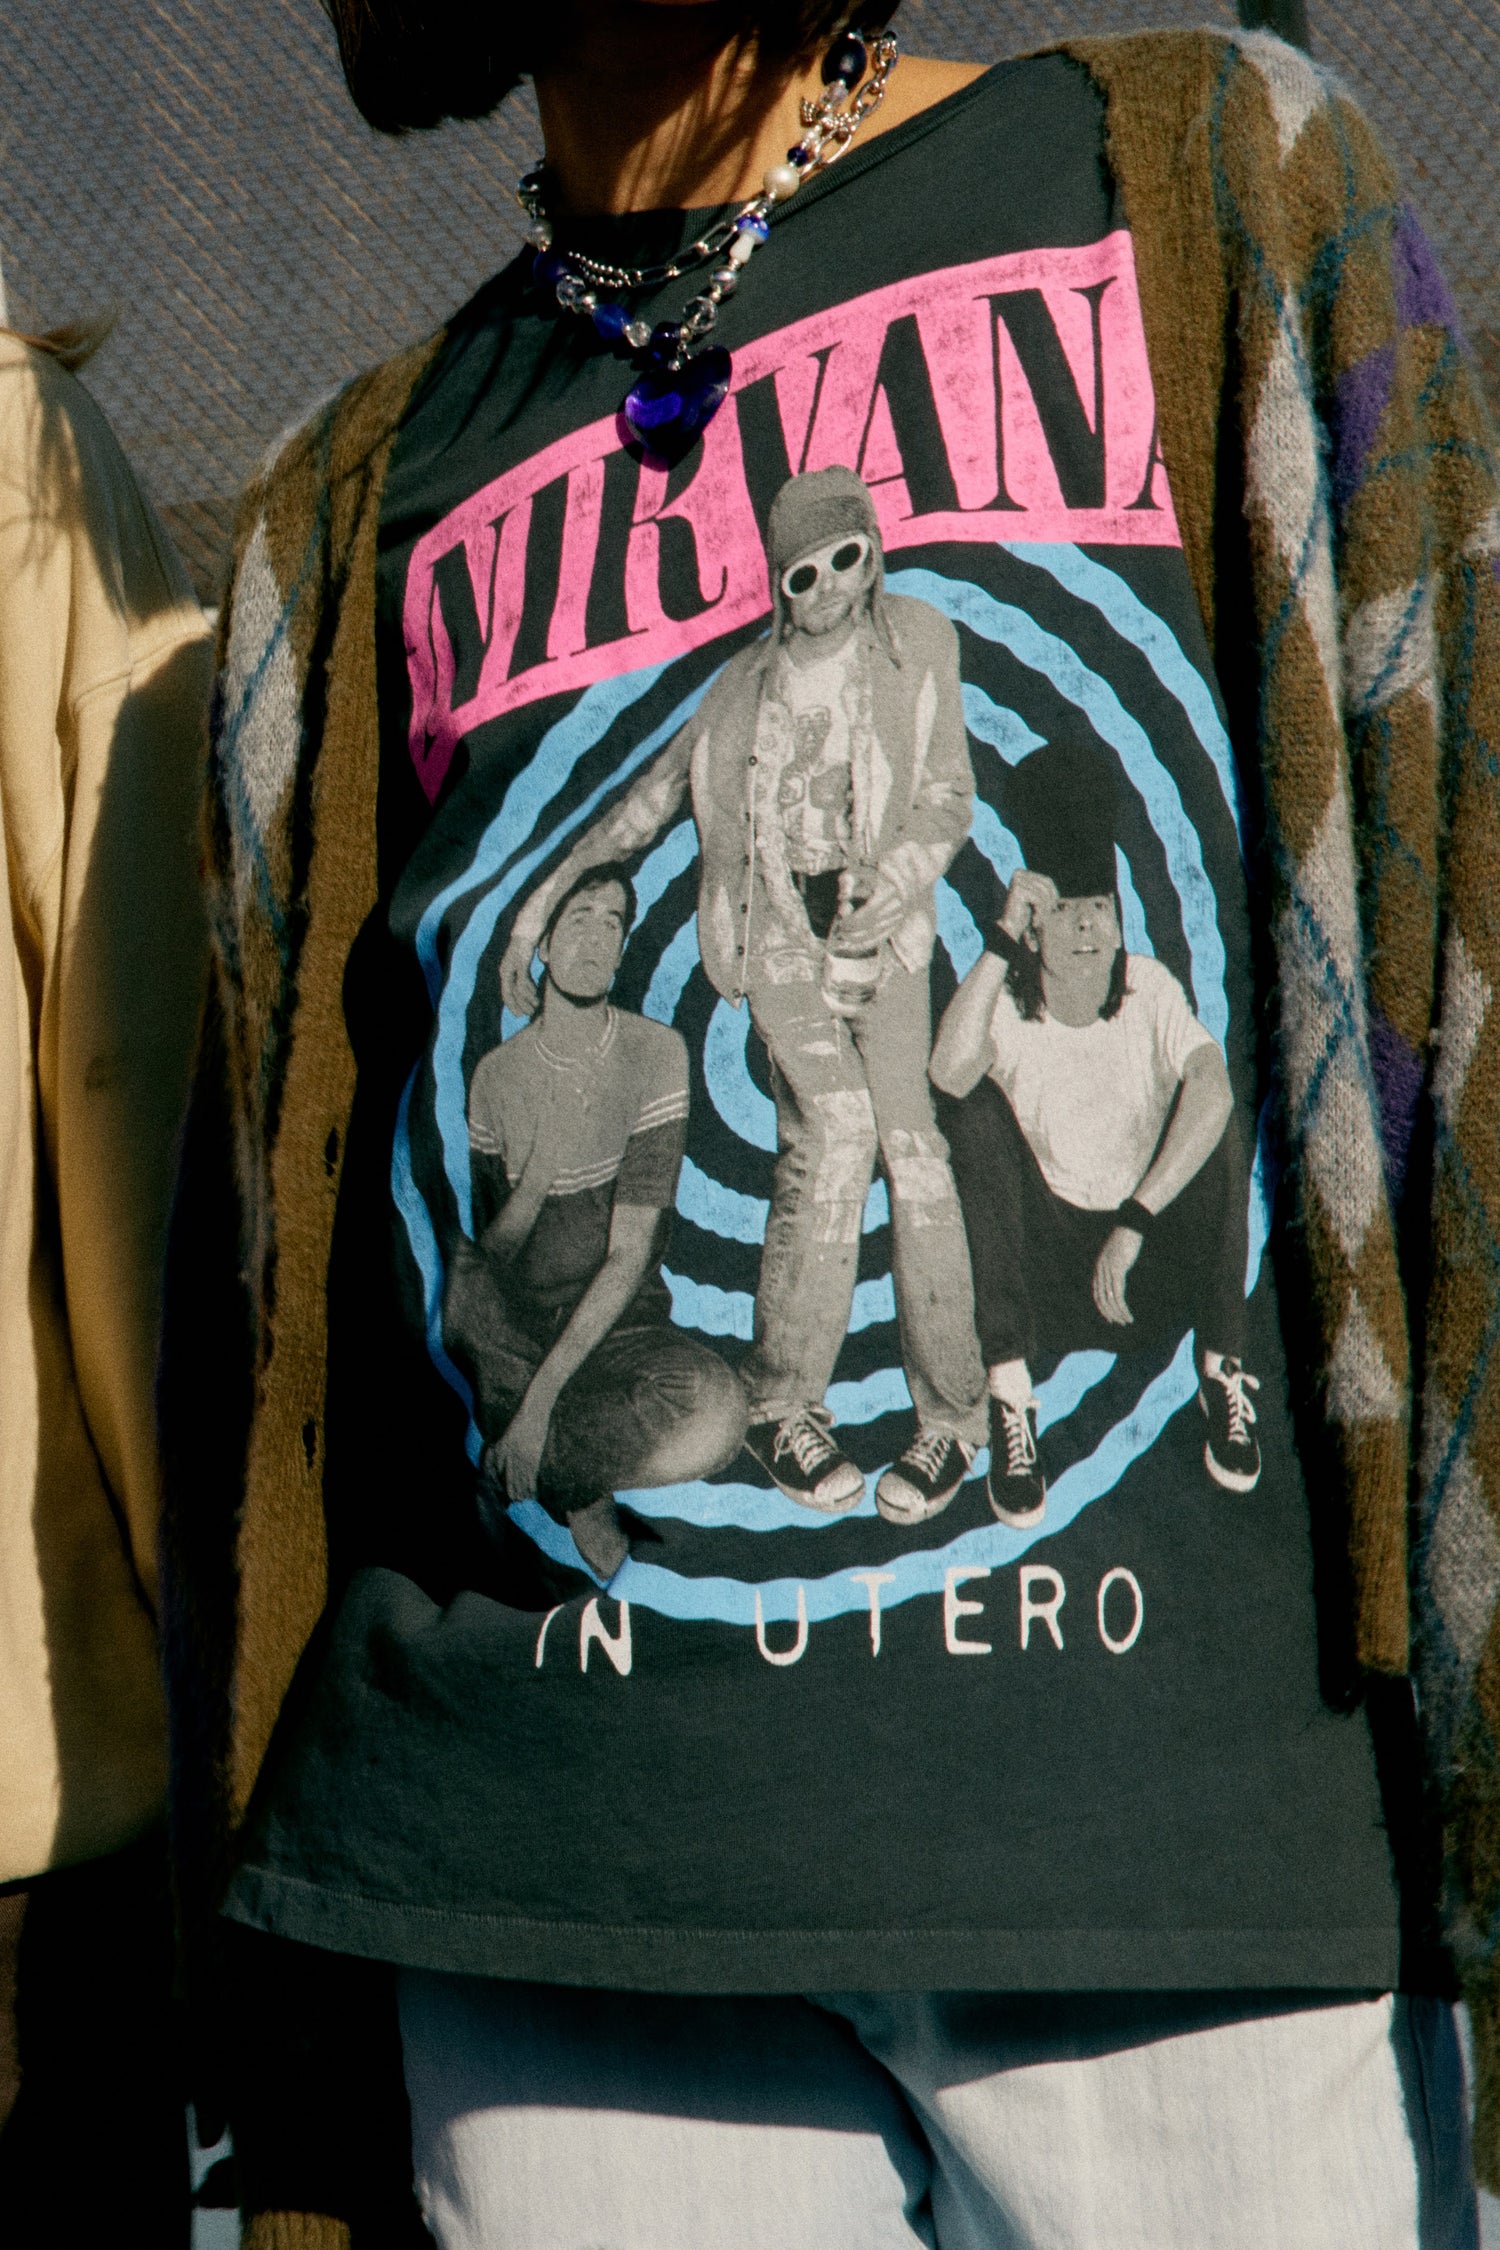 Nirvana tee with cardigan